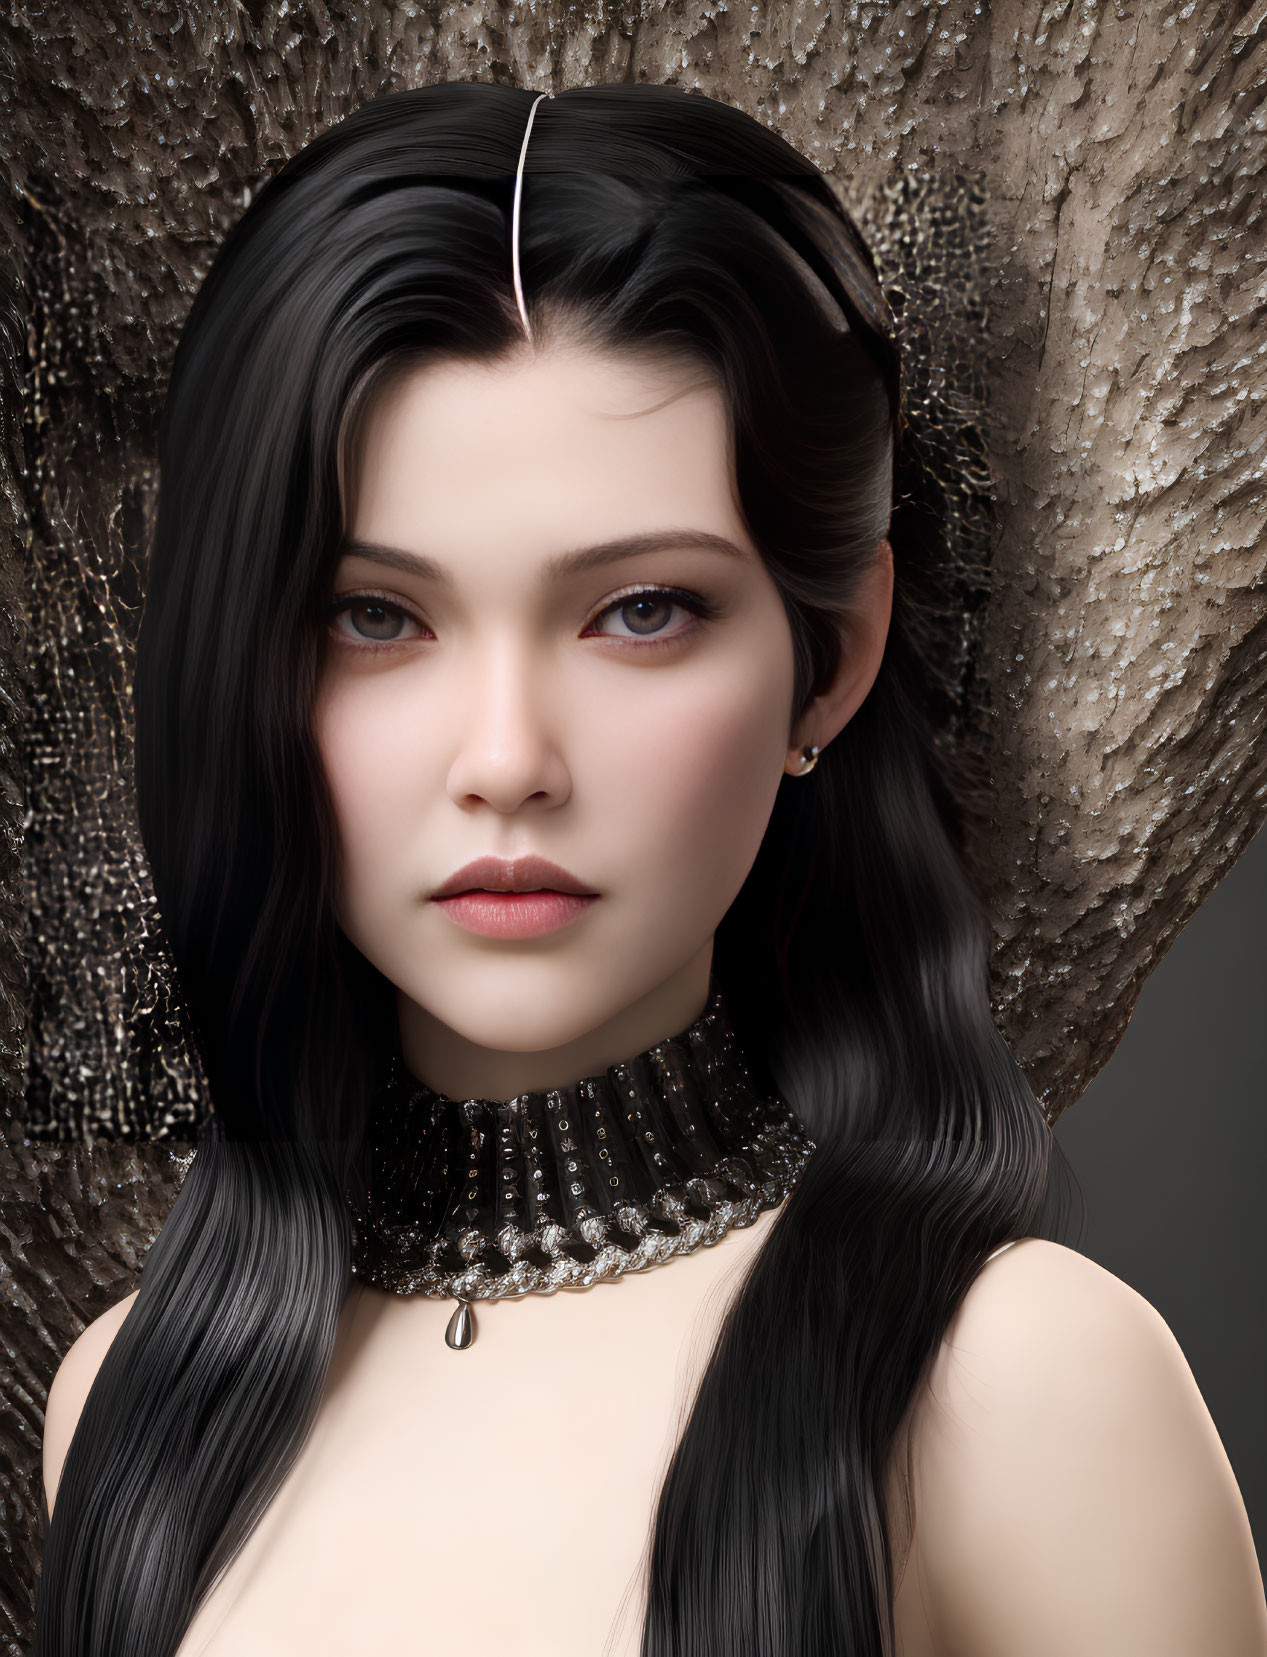 Portrait of woman with long black hair, fair skin, striking makeup, silver choker, textured backdrop